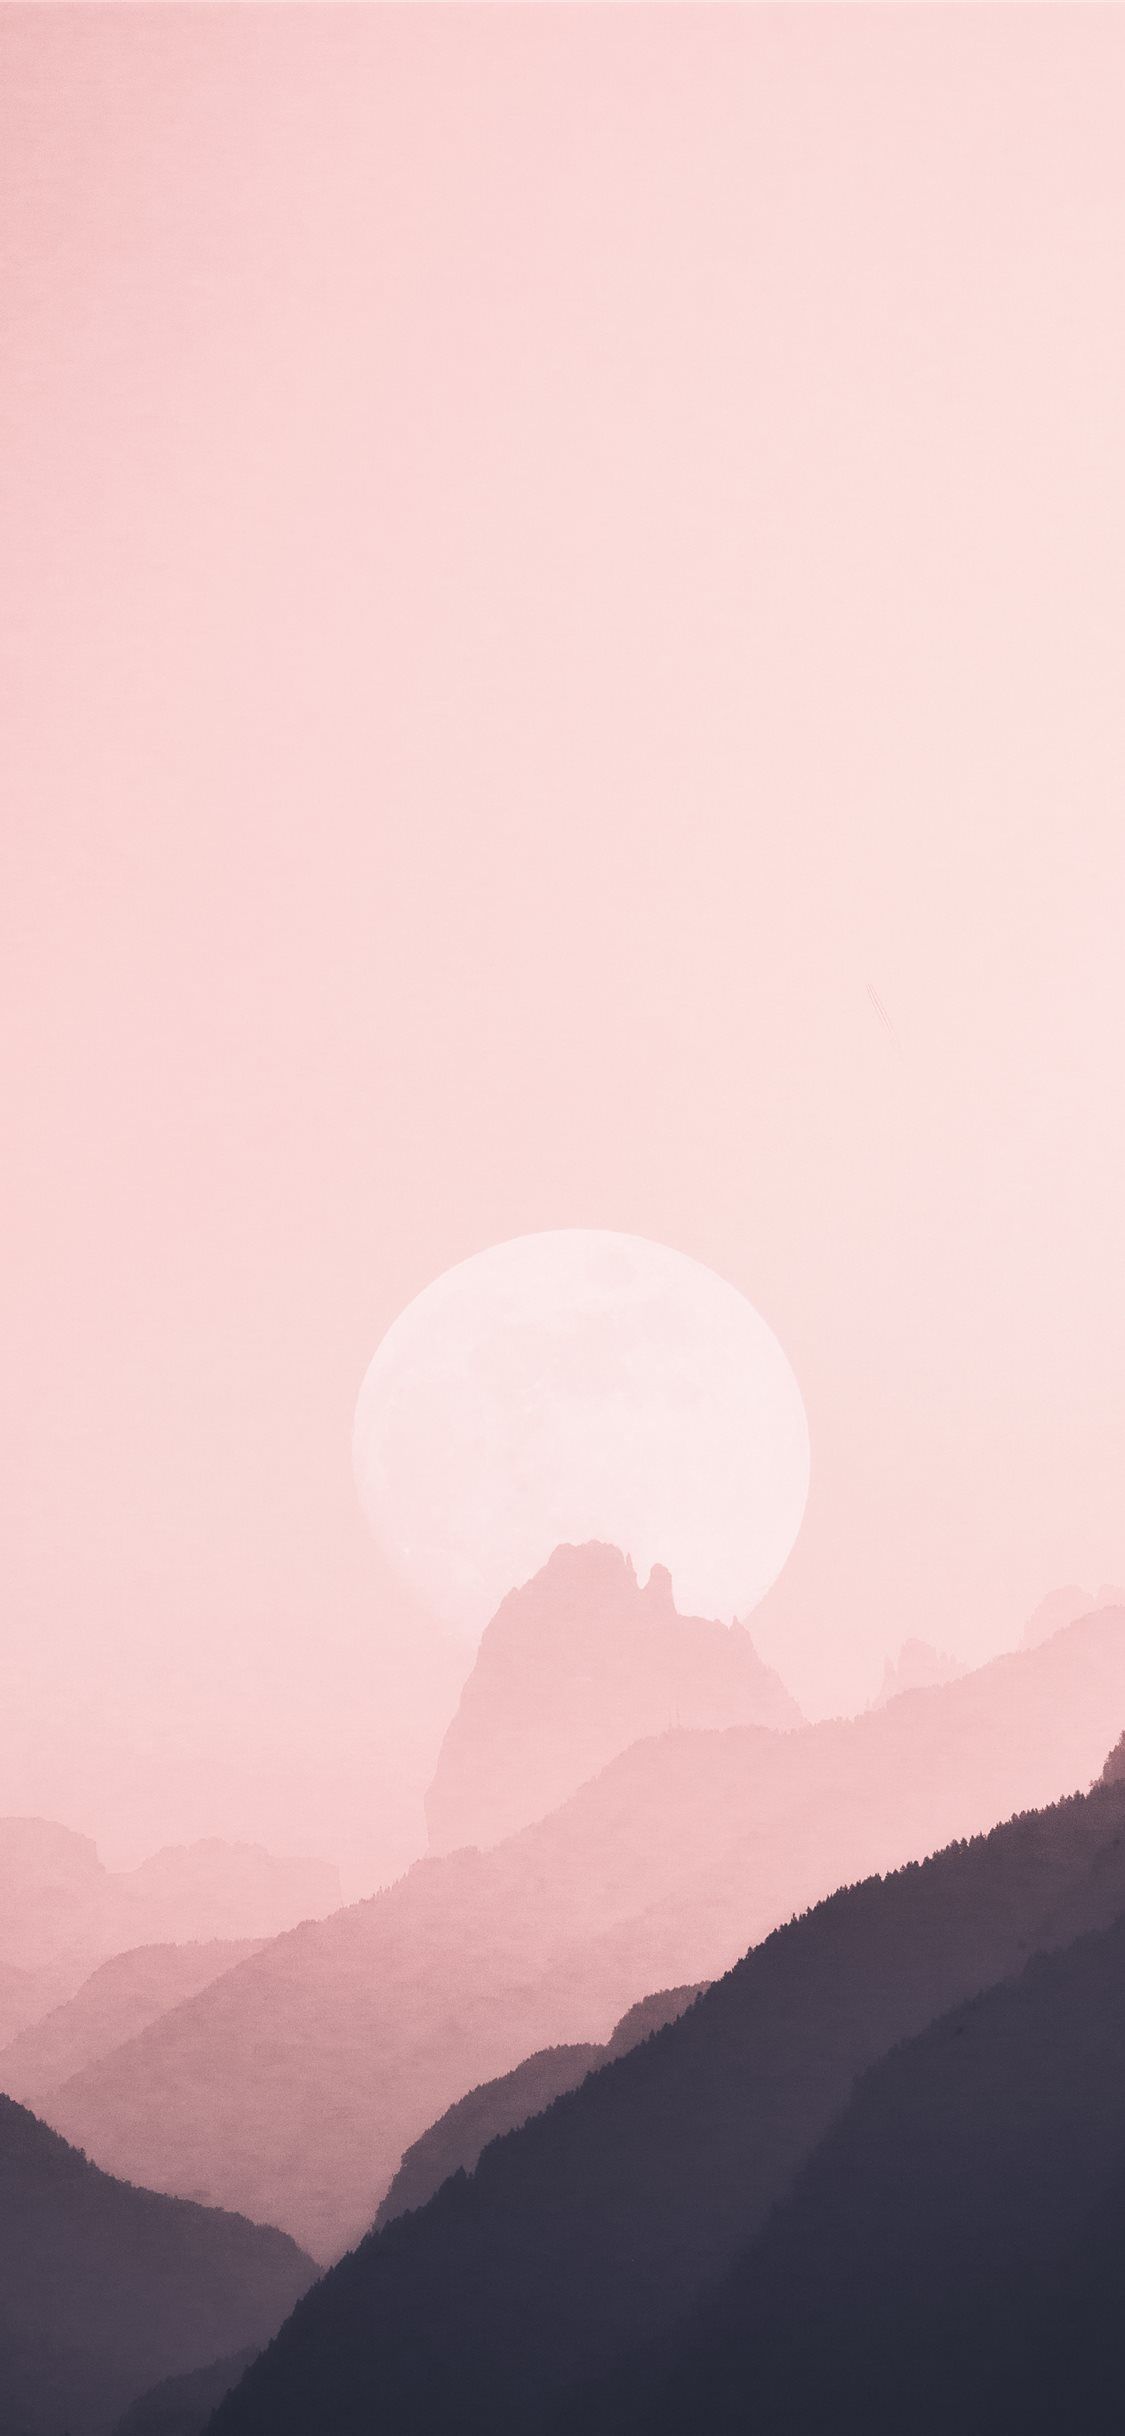 moon near mountain ridge iPhone Wallpapers Free Download